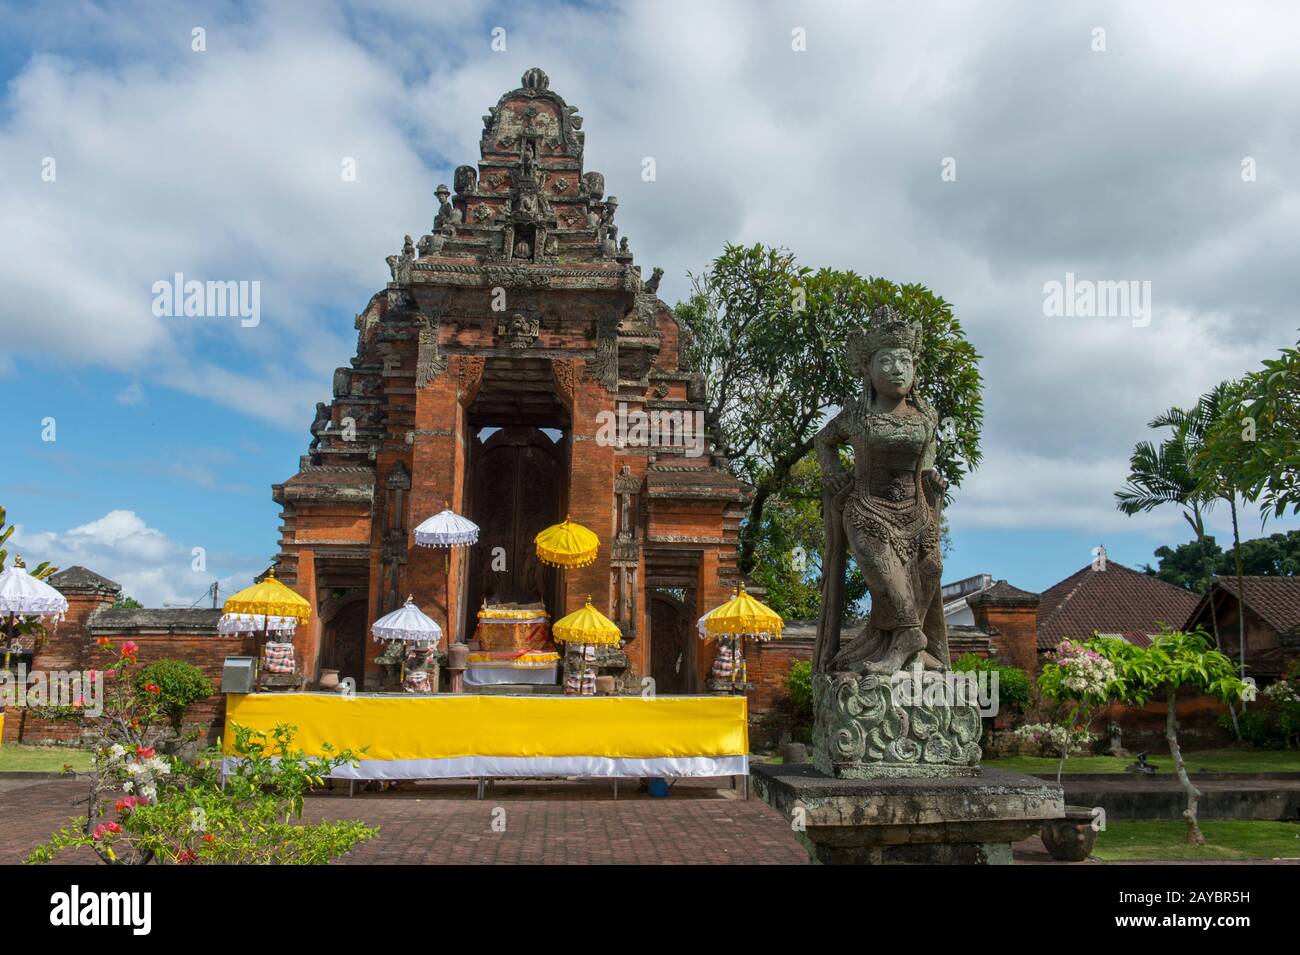 One of the gates to the Puri Semarapura Palace, Klungkung, Bali, Indonesia. Stock Photo